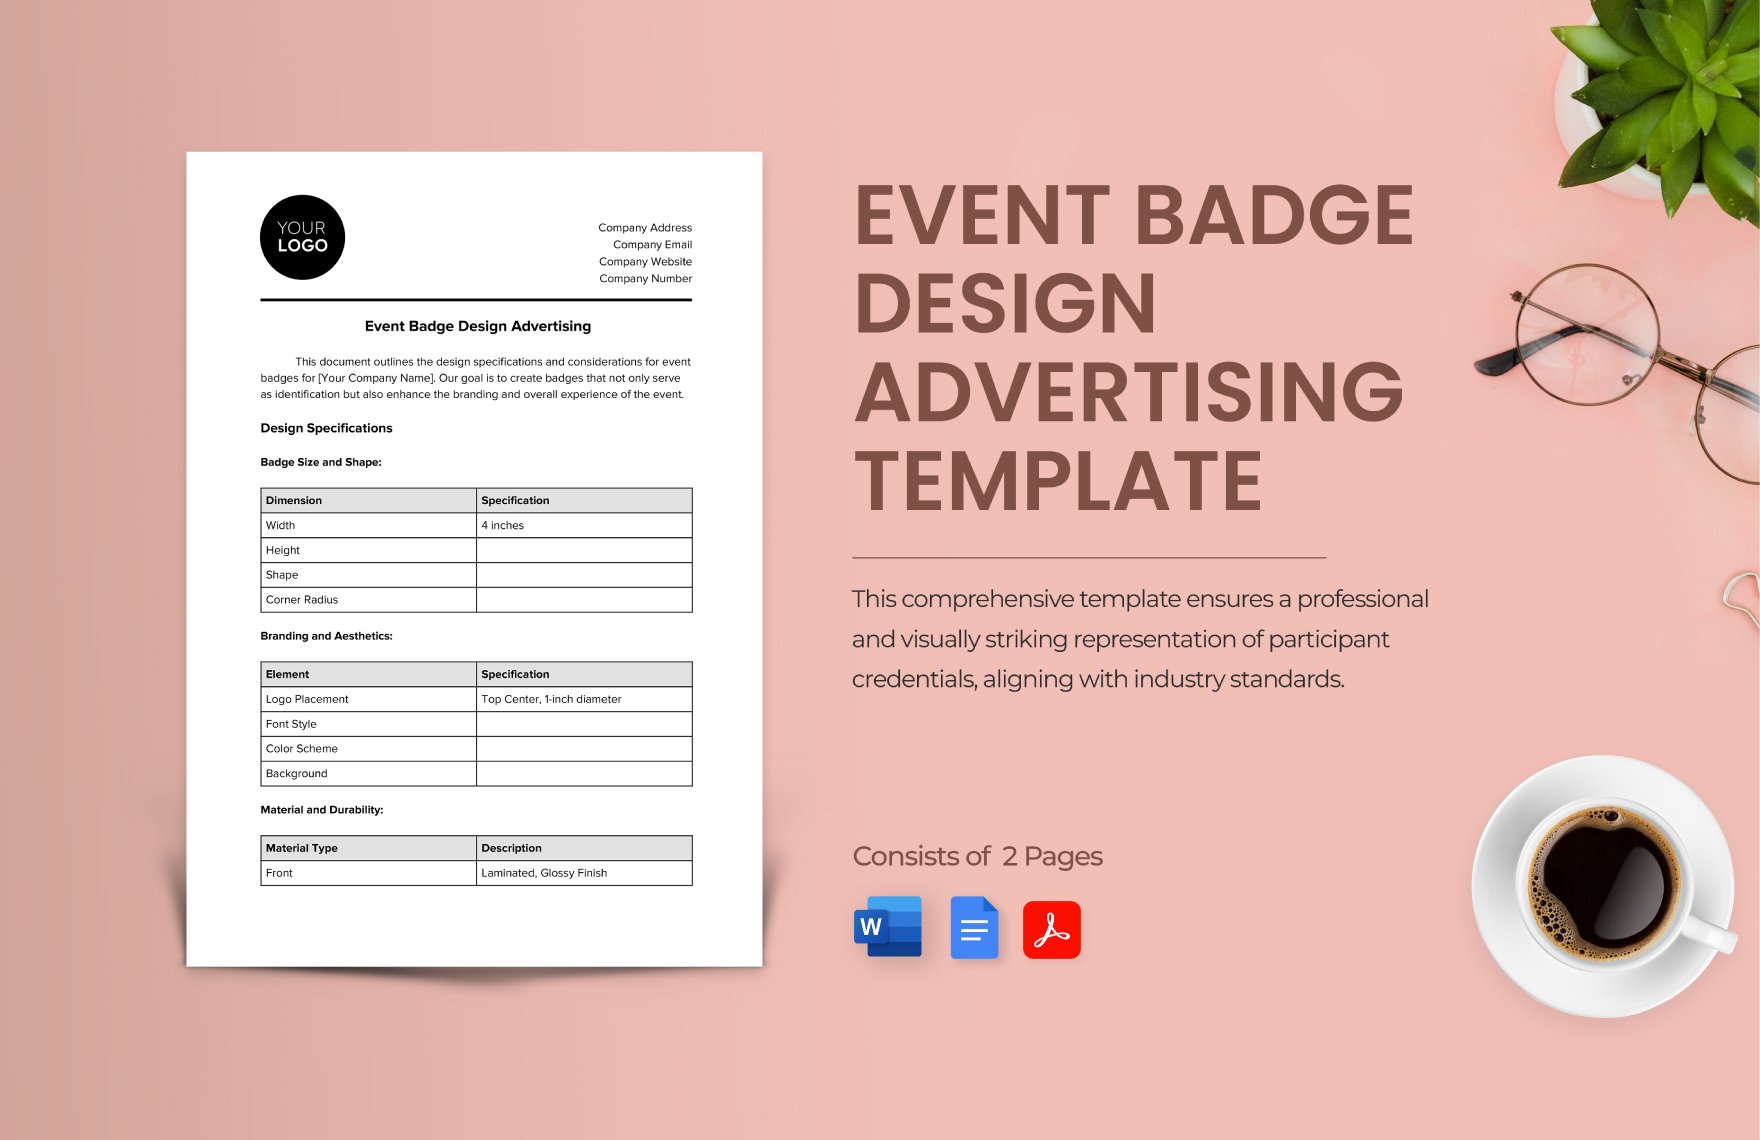 Event Badge Design Advertising Template